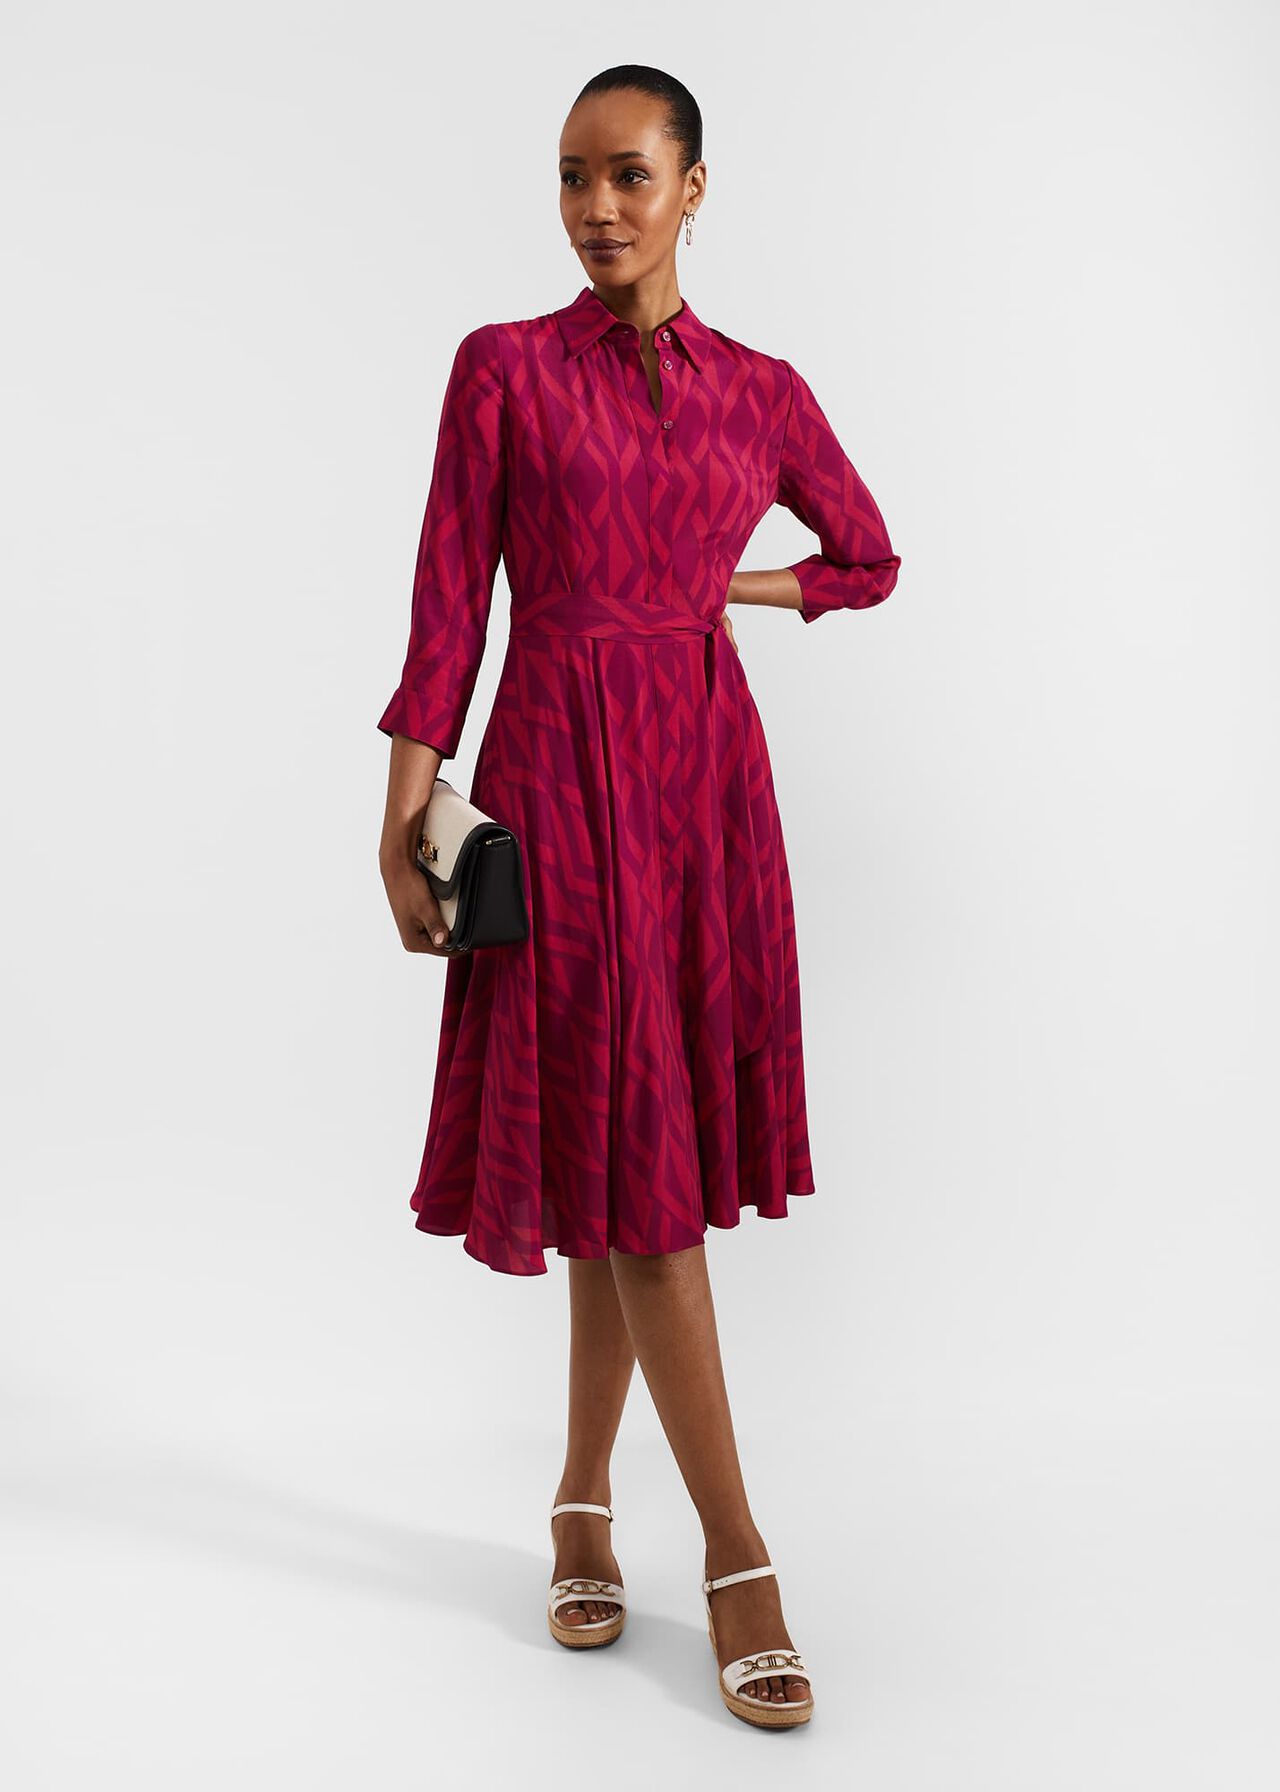 Lainey Dress, Pink Multi, hi-res